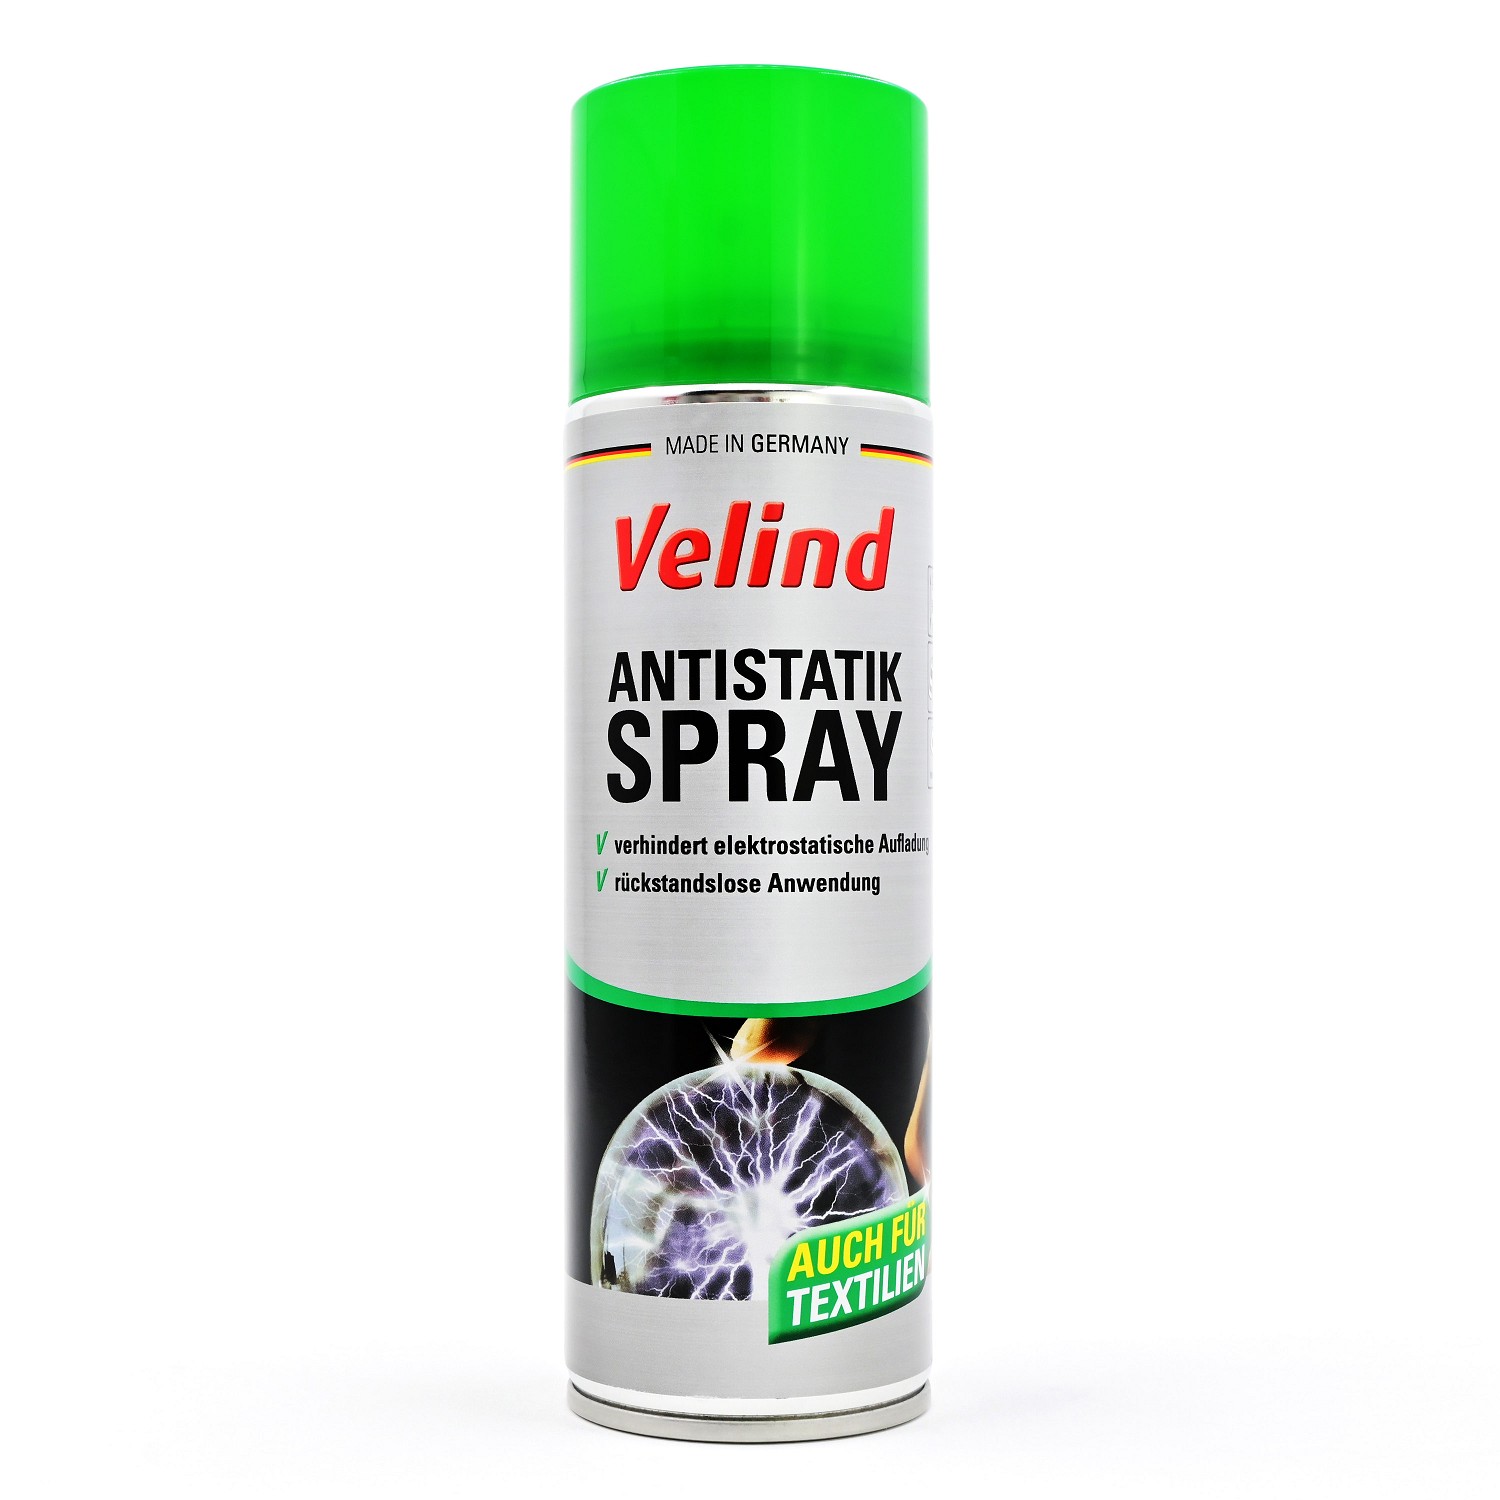 Velind Antistatik Spray 300 ml, 300 ml